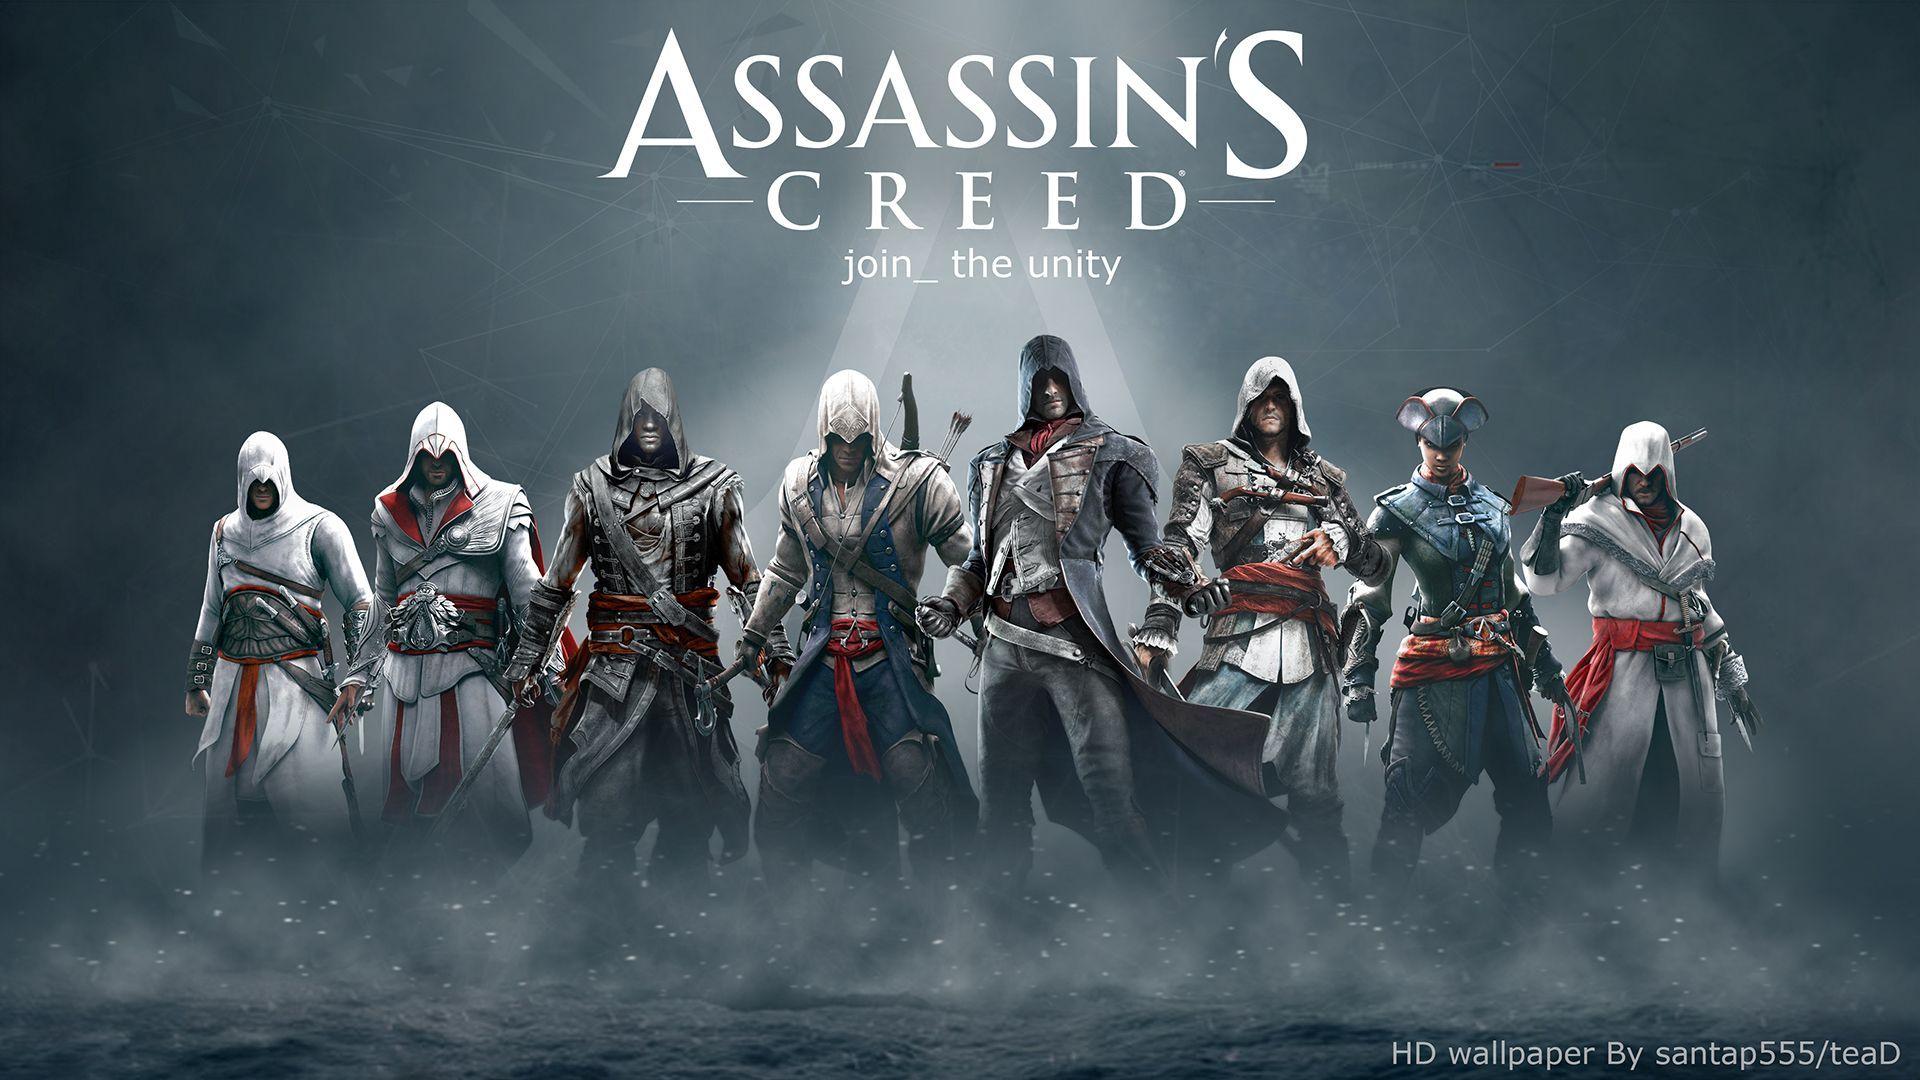 Assassin's Creed. Assassins